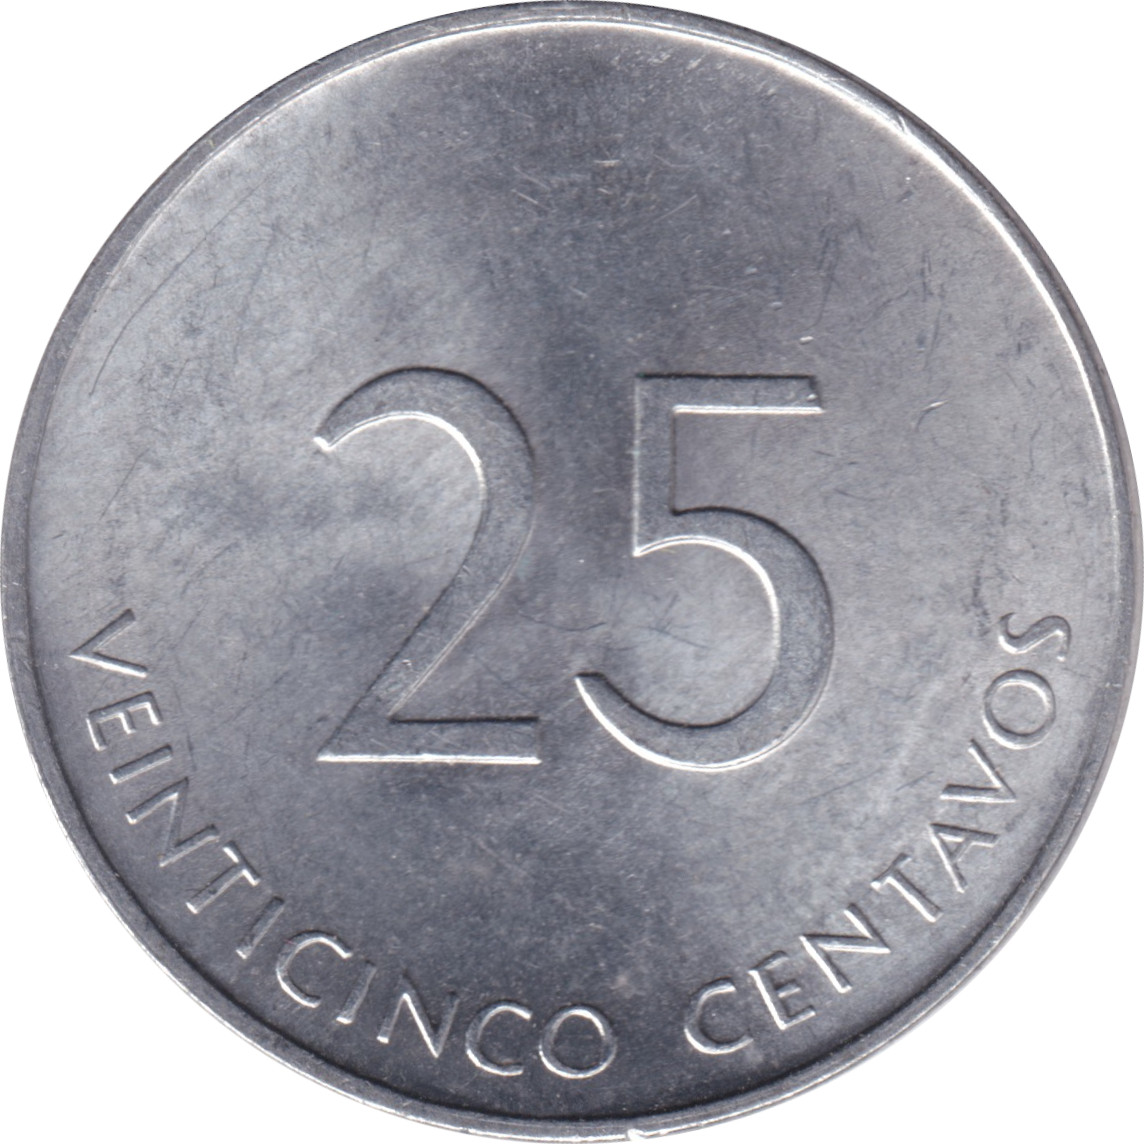 25 centavos - Intur - Valeur faciale au revers